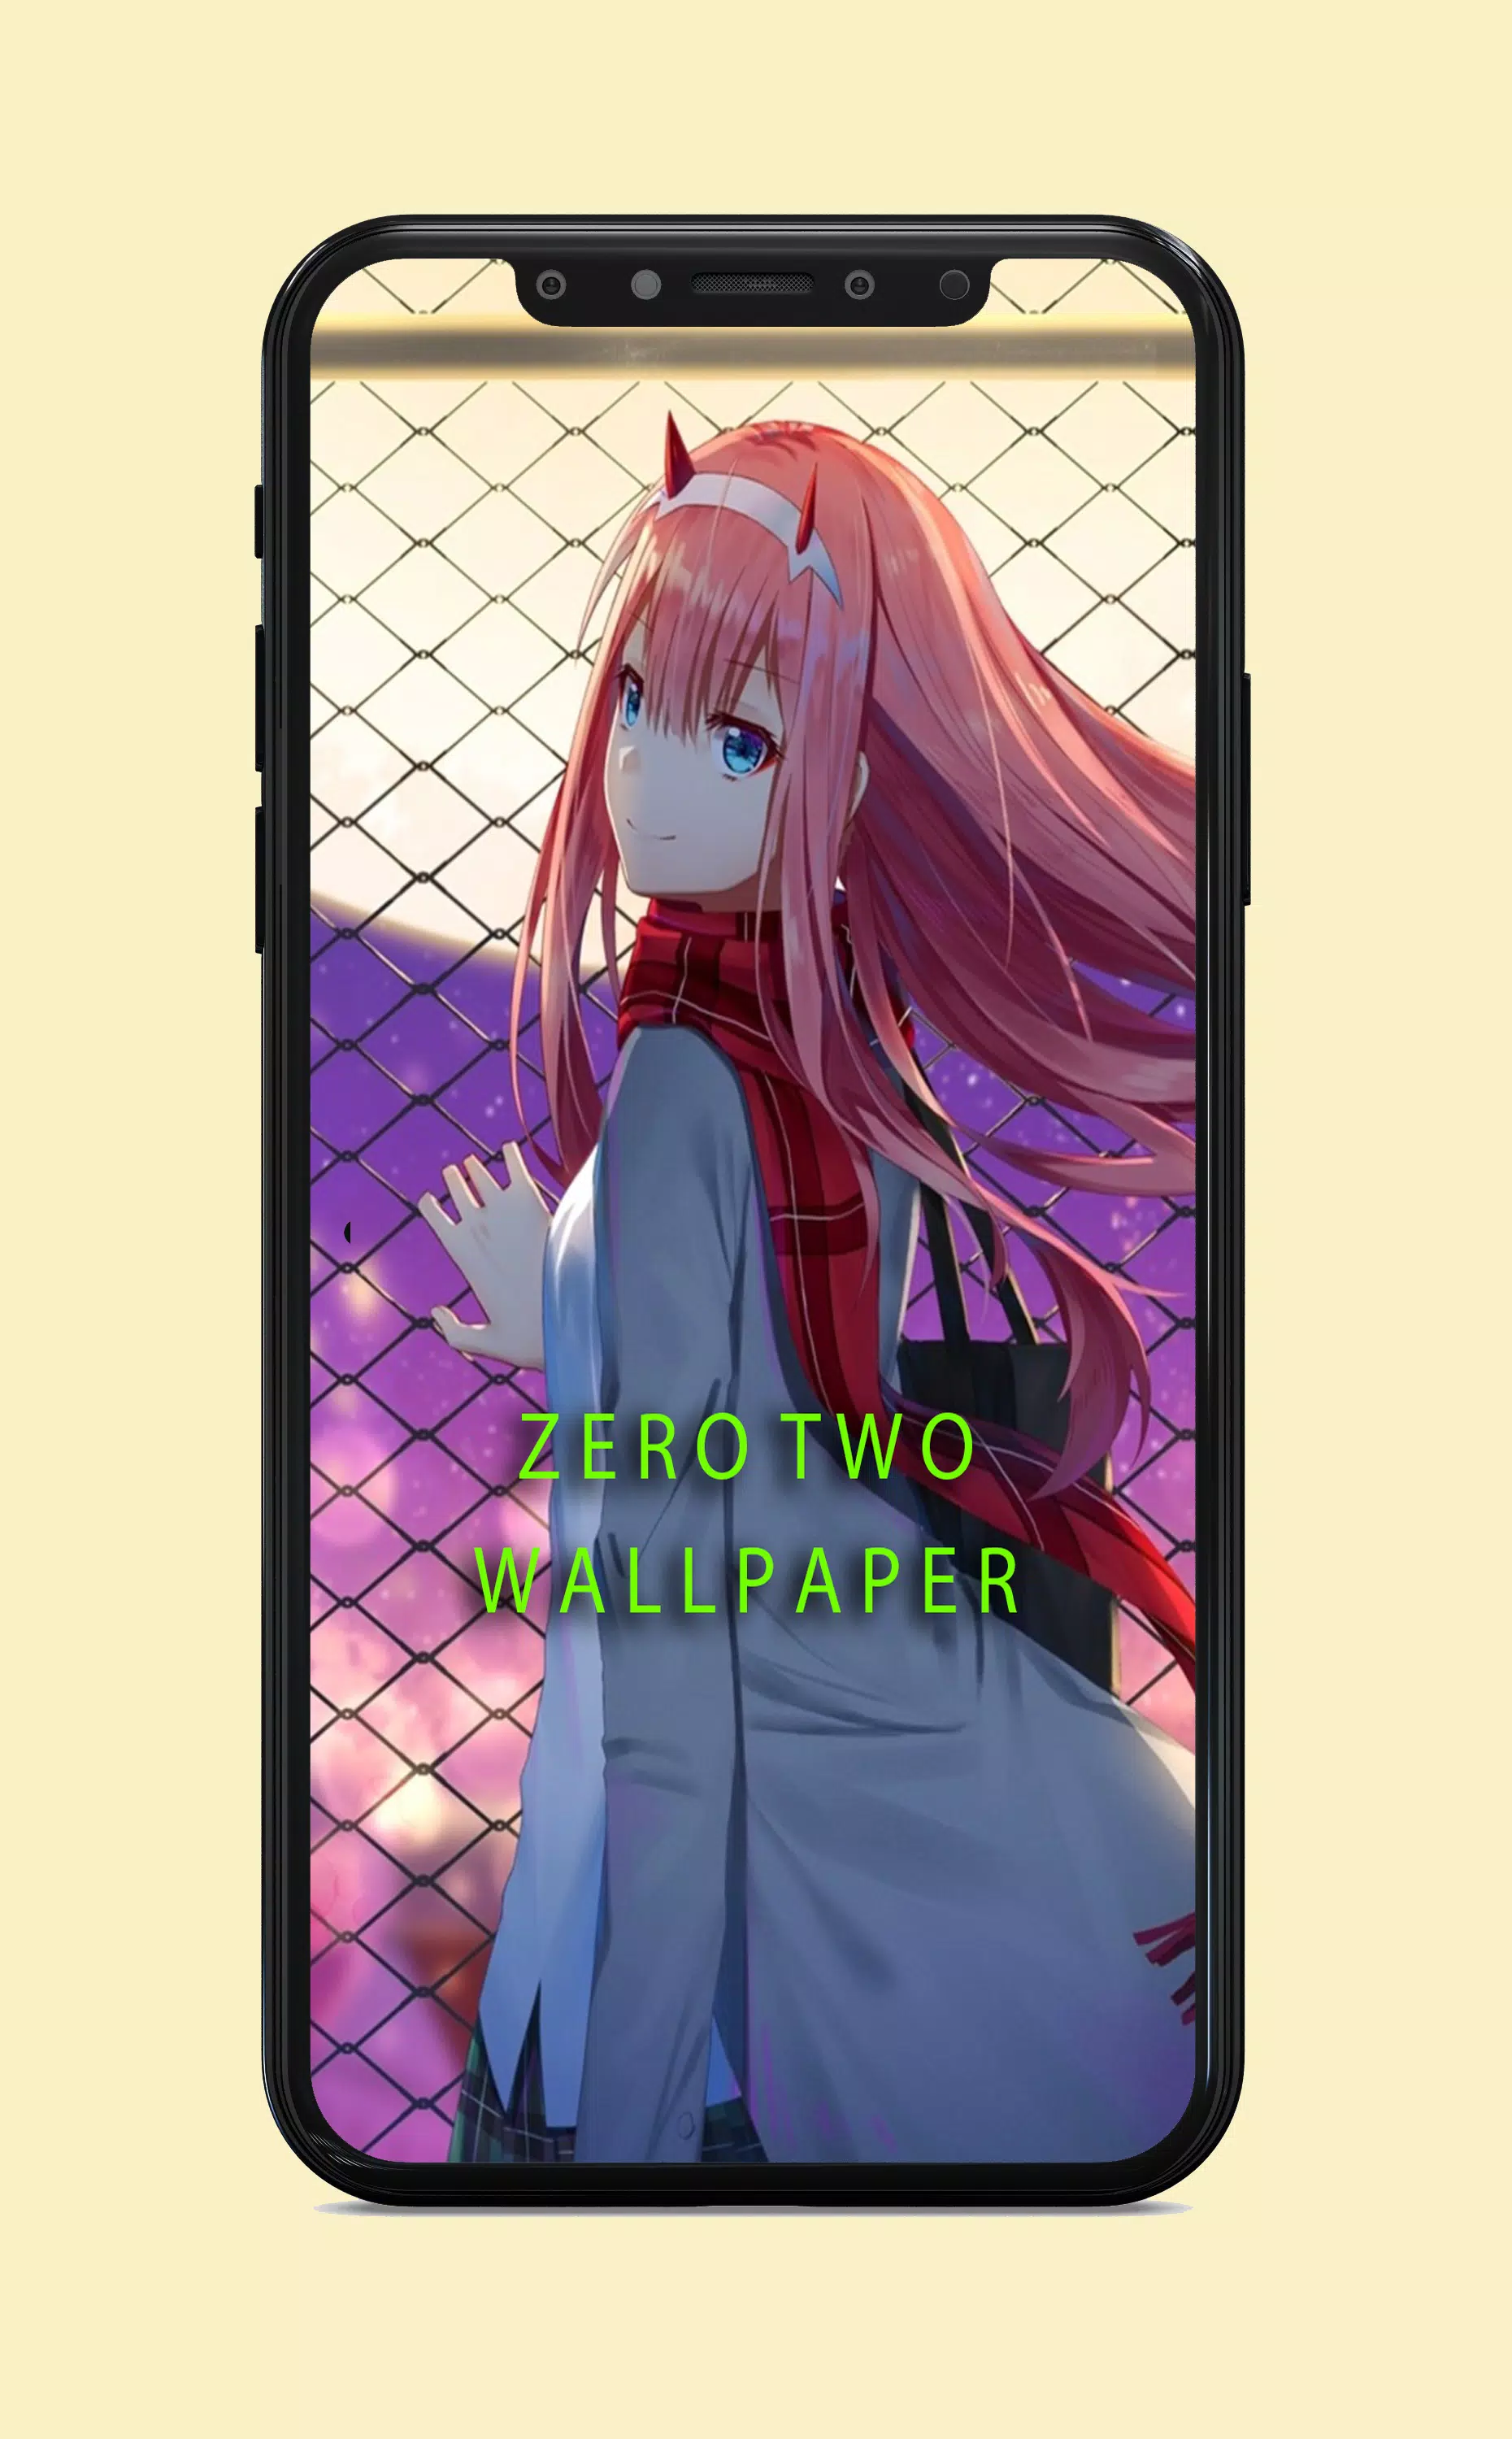 sora yori mo tooi basho wallpaper APK for Android Download